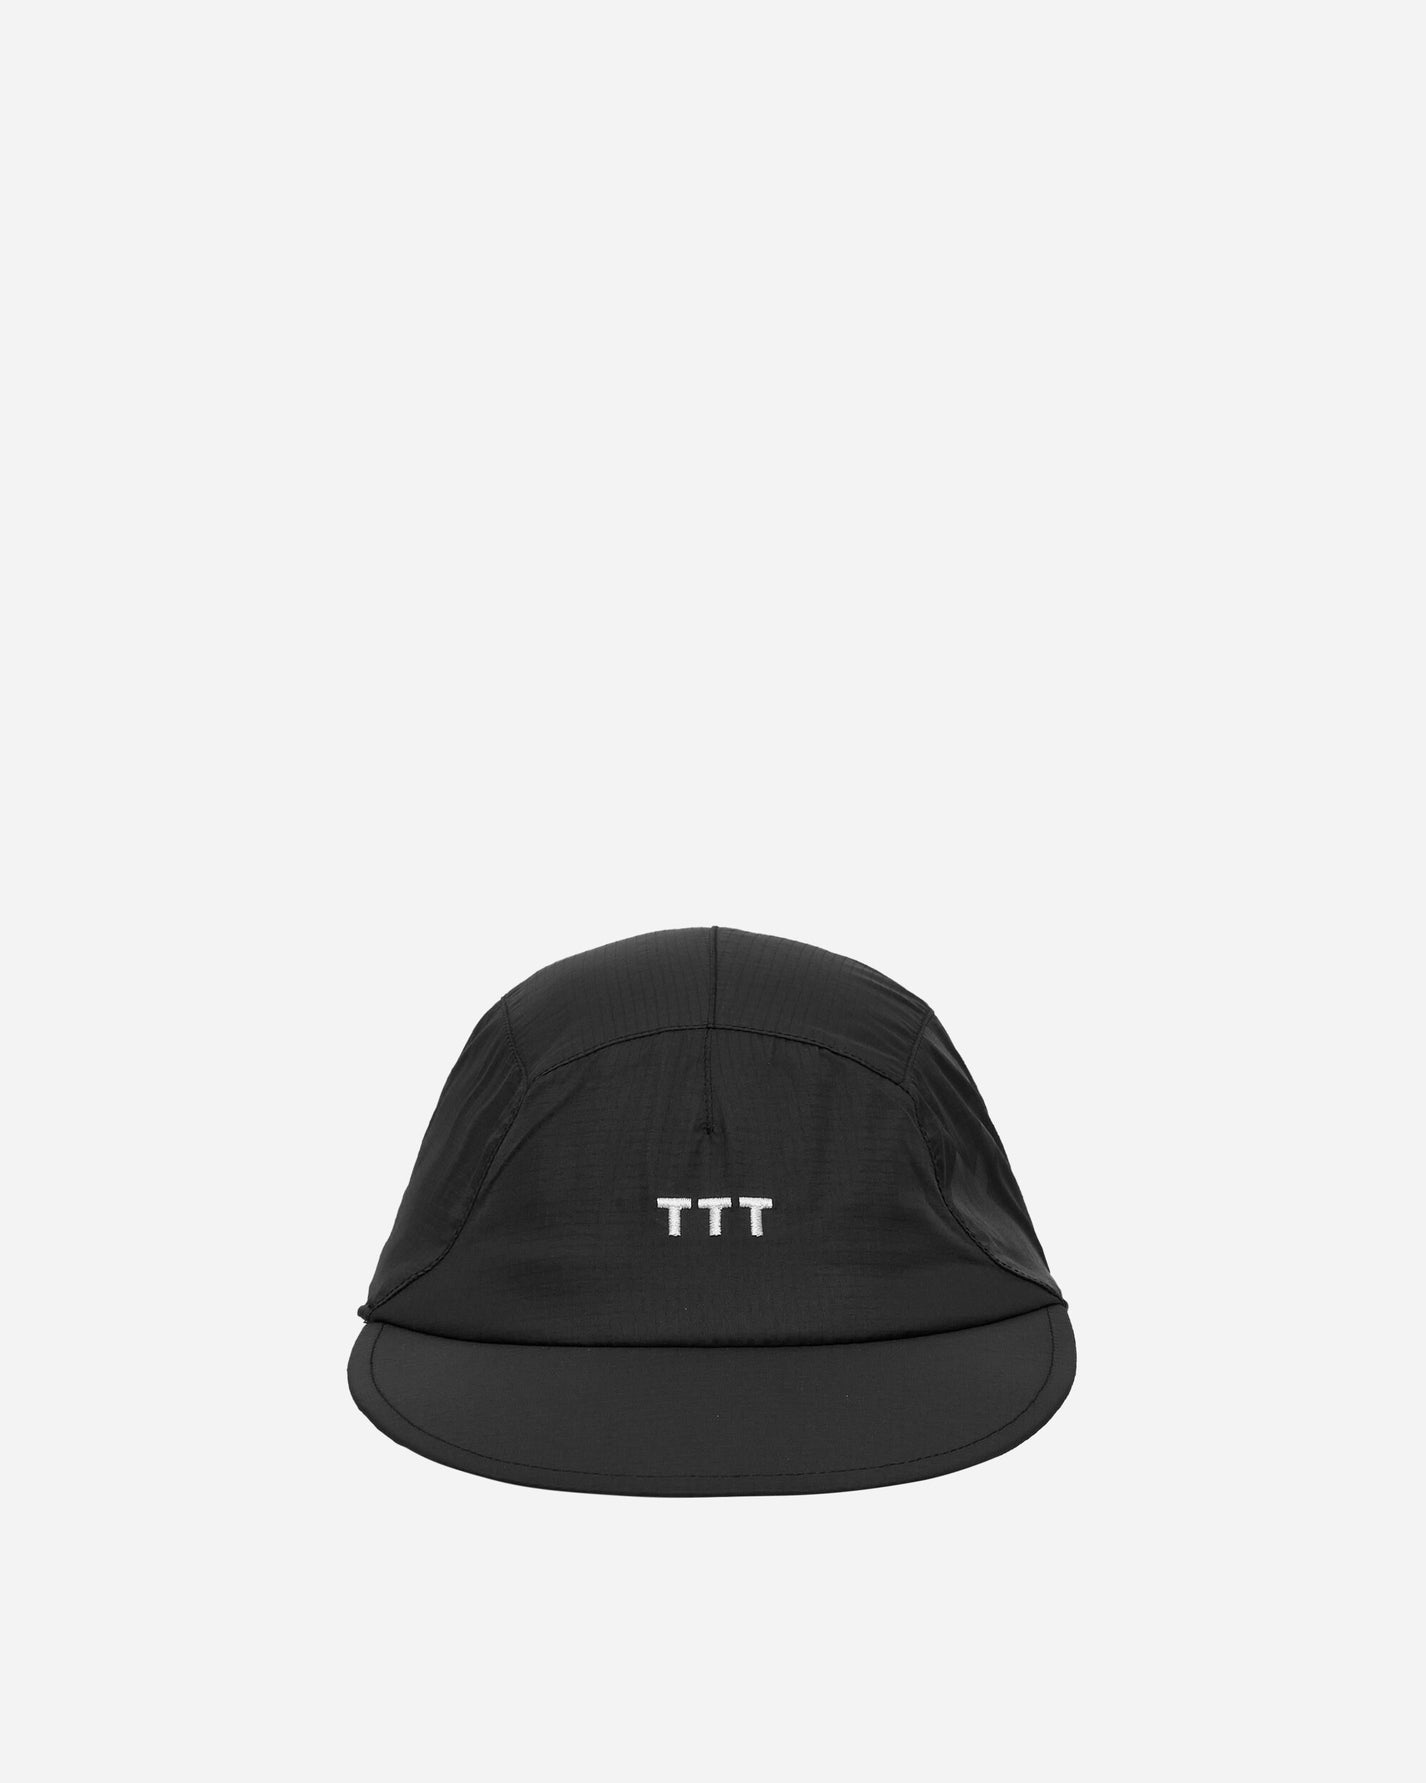 The Trilogy Tapes Ttt Panel Running Cap Black Hats Caps TTT11H003 003